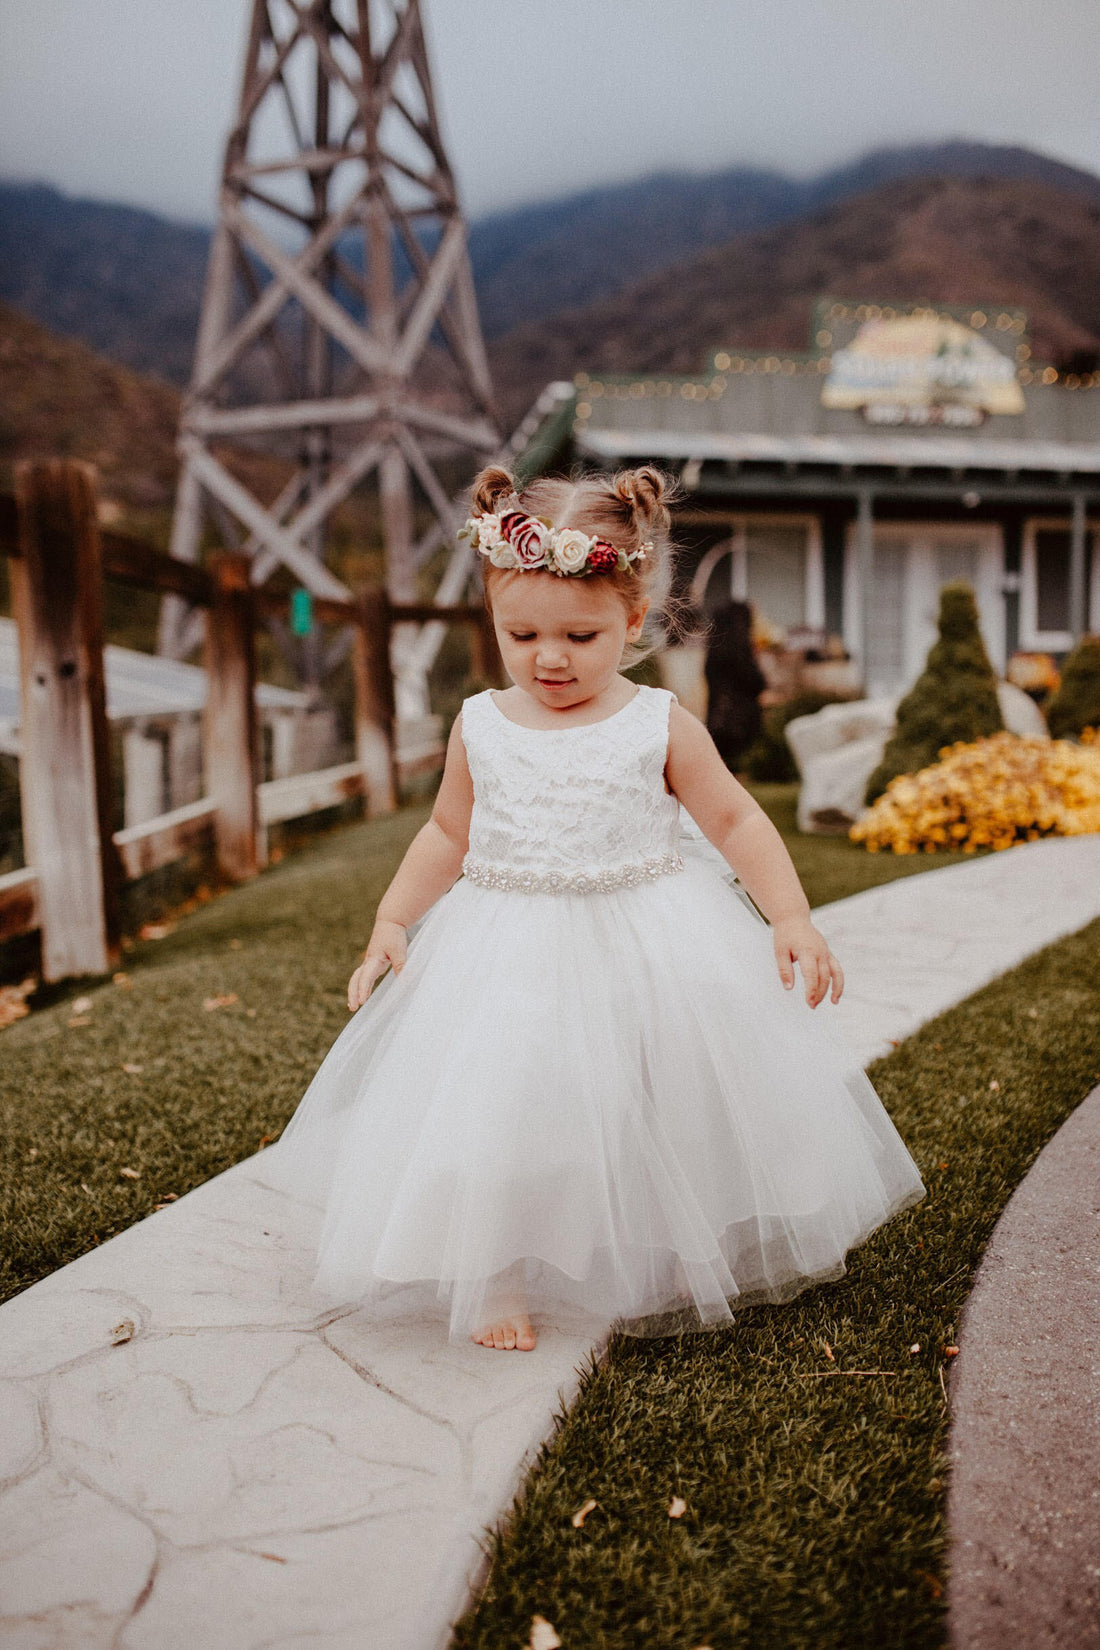 Anastasia Baby Girls Lace Top Dress -White & Ivory - Rhinestone Trim♥